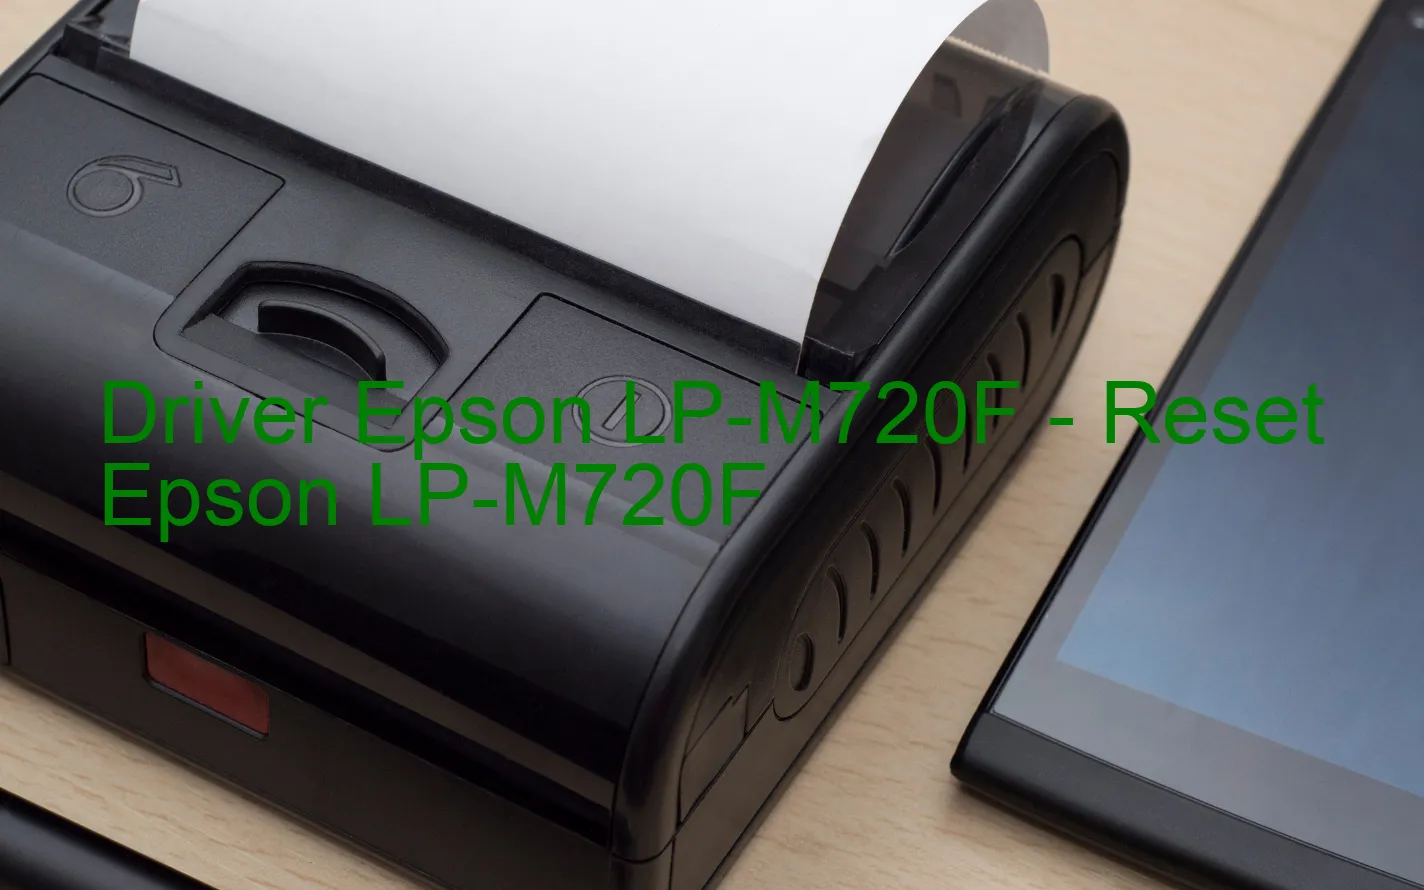 Epson LP-M720Fのドライバー、Epson LP-M720Fのリセットソフトウェア